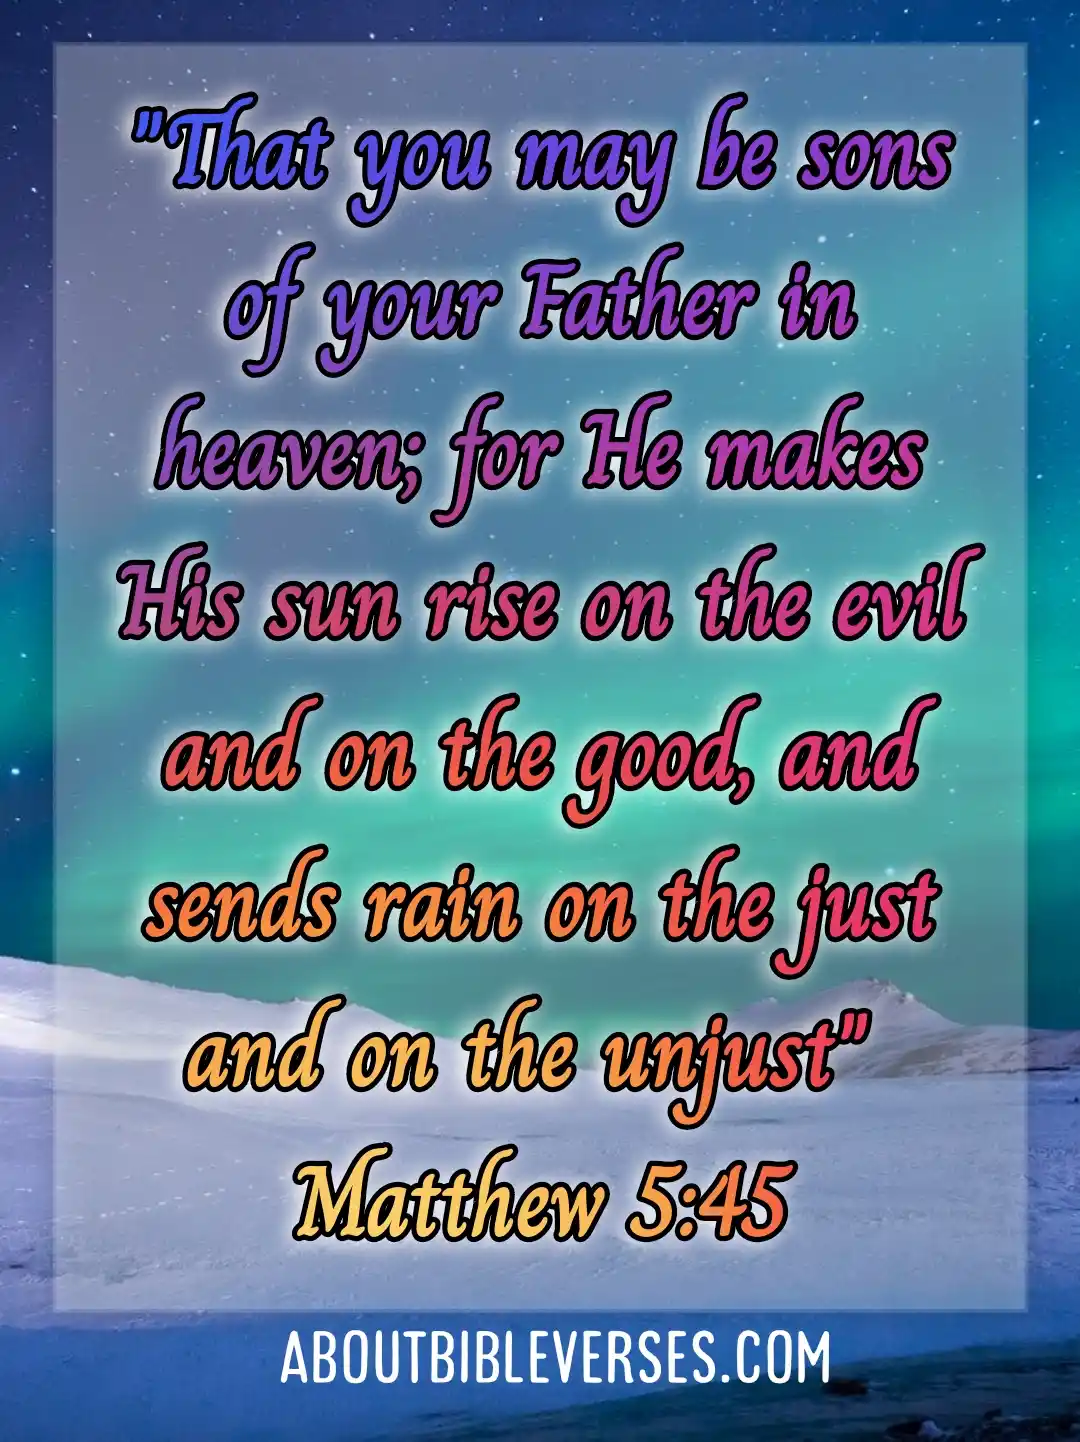 Today's bible verse (Matthew 5:45)